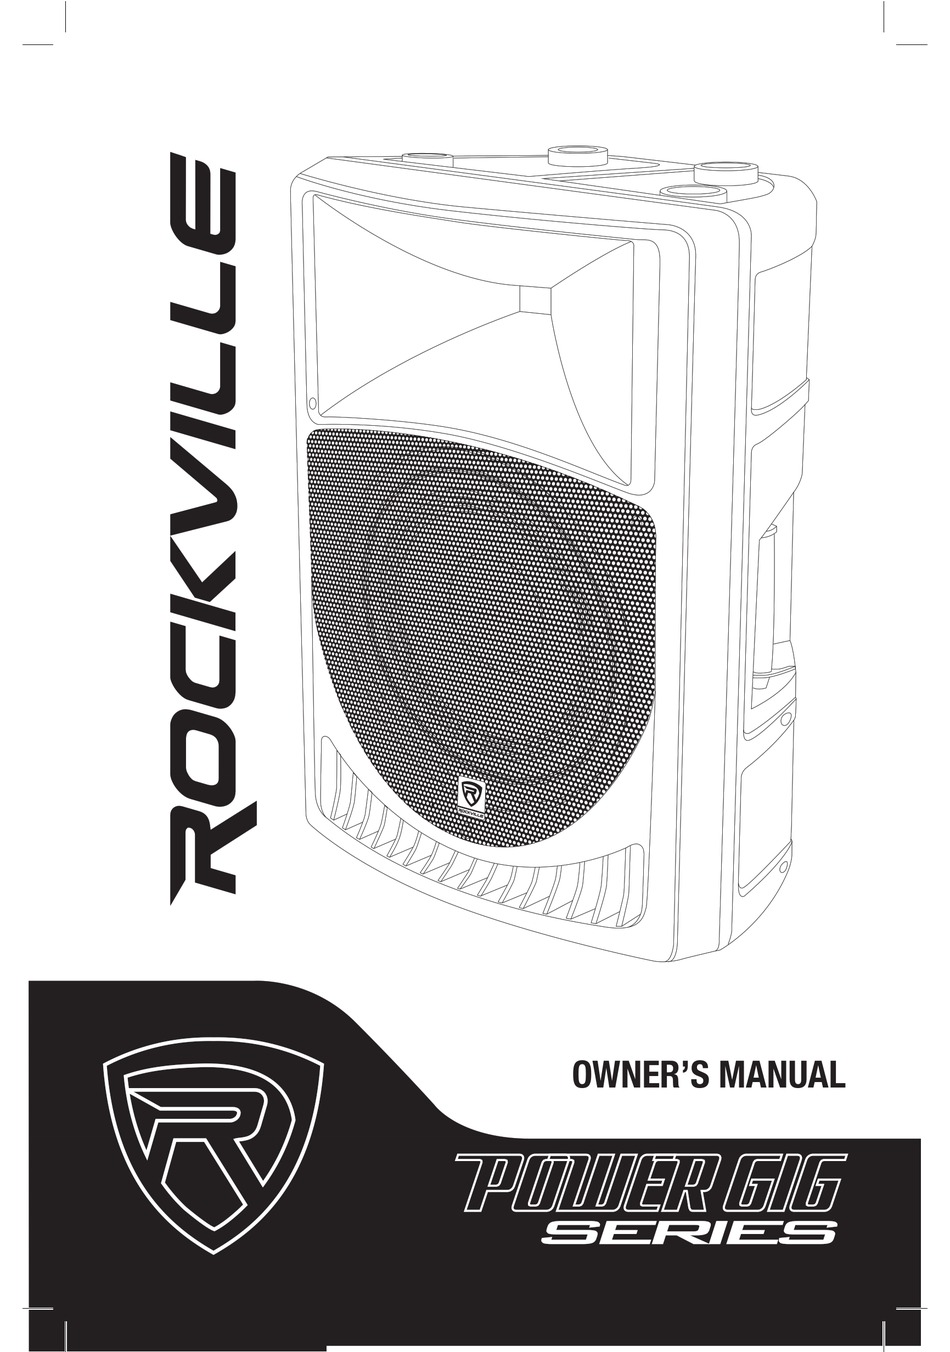 ROCKVILLE POWER GIG SERIES OWNER'S MANUAL Pdf Download | ManualsLib